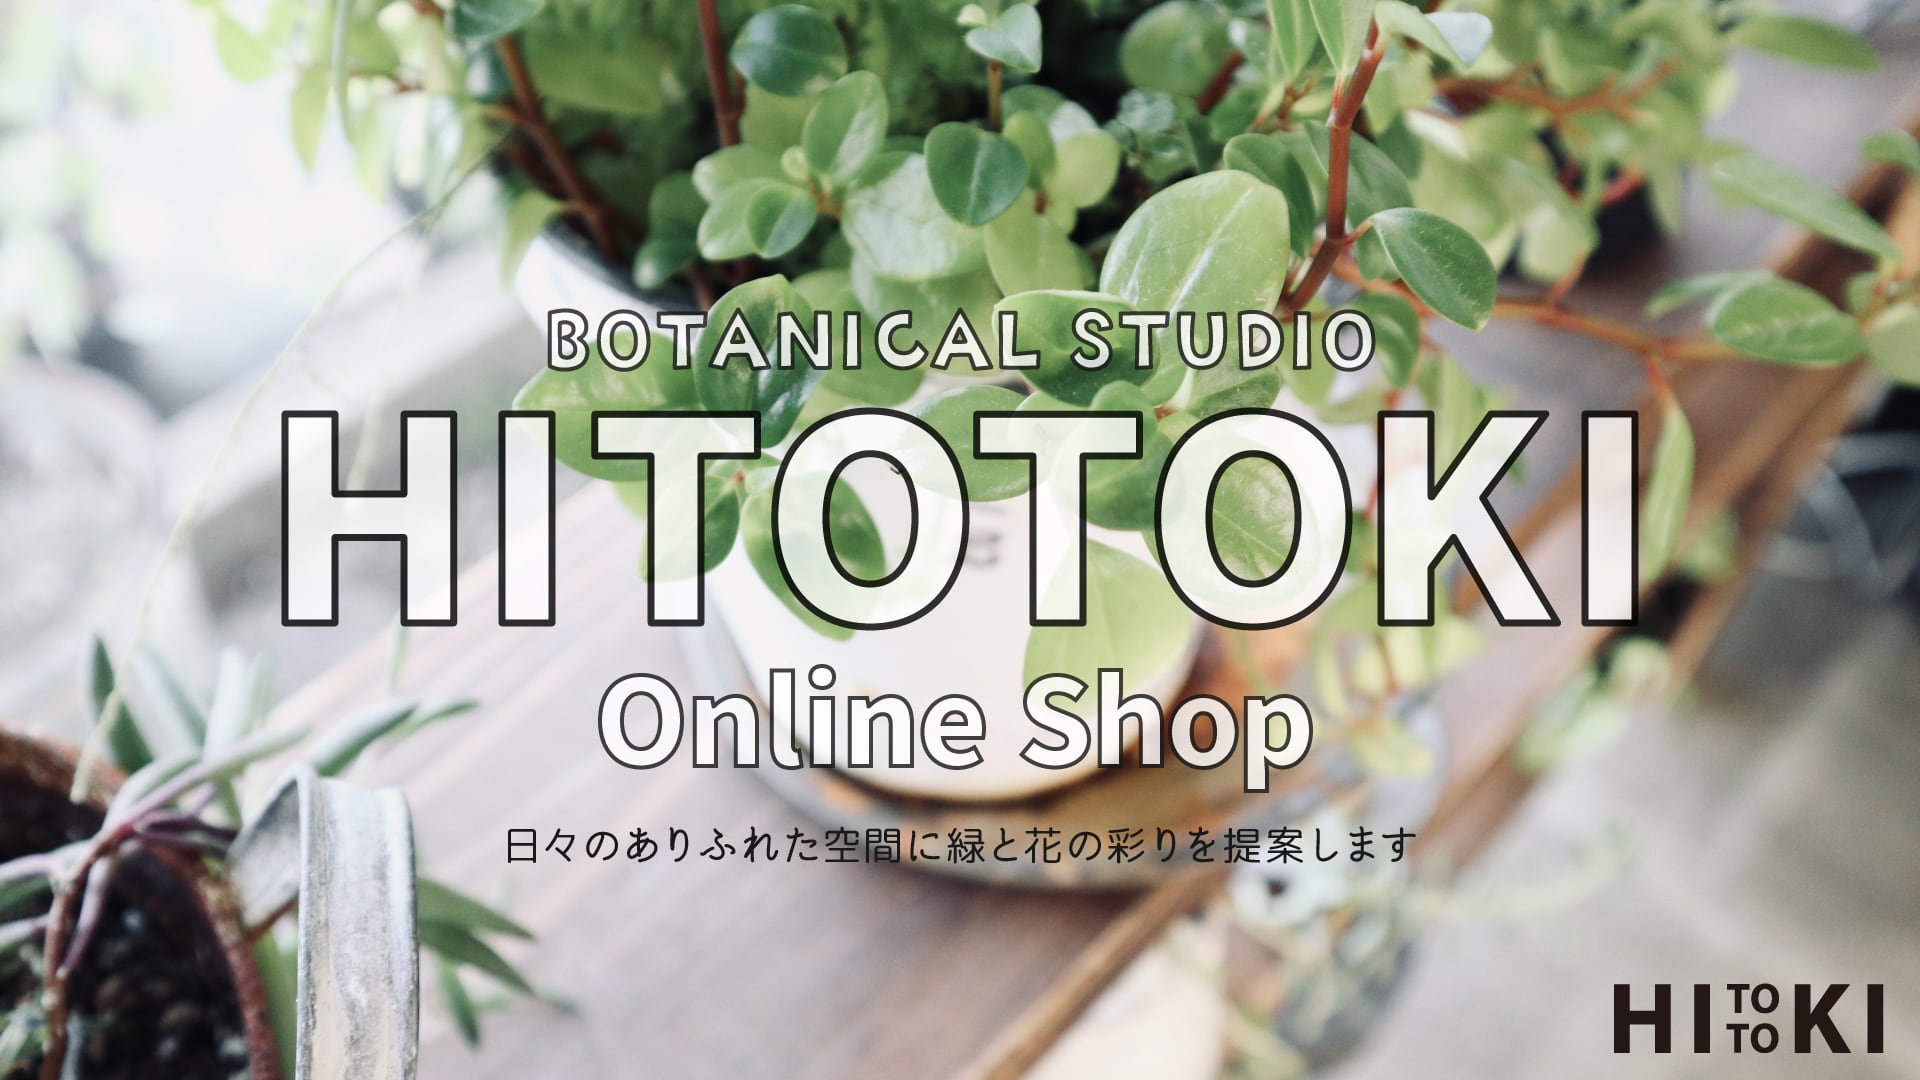 Hitotoki Online shop